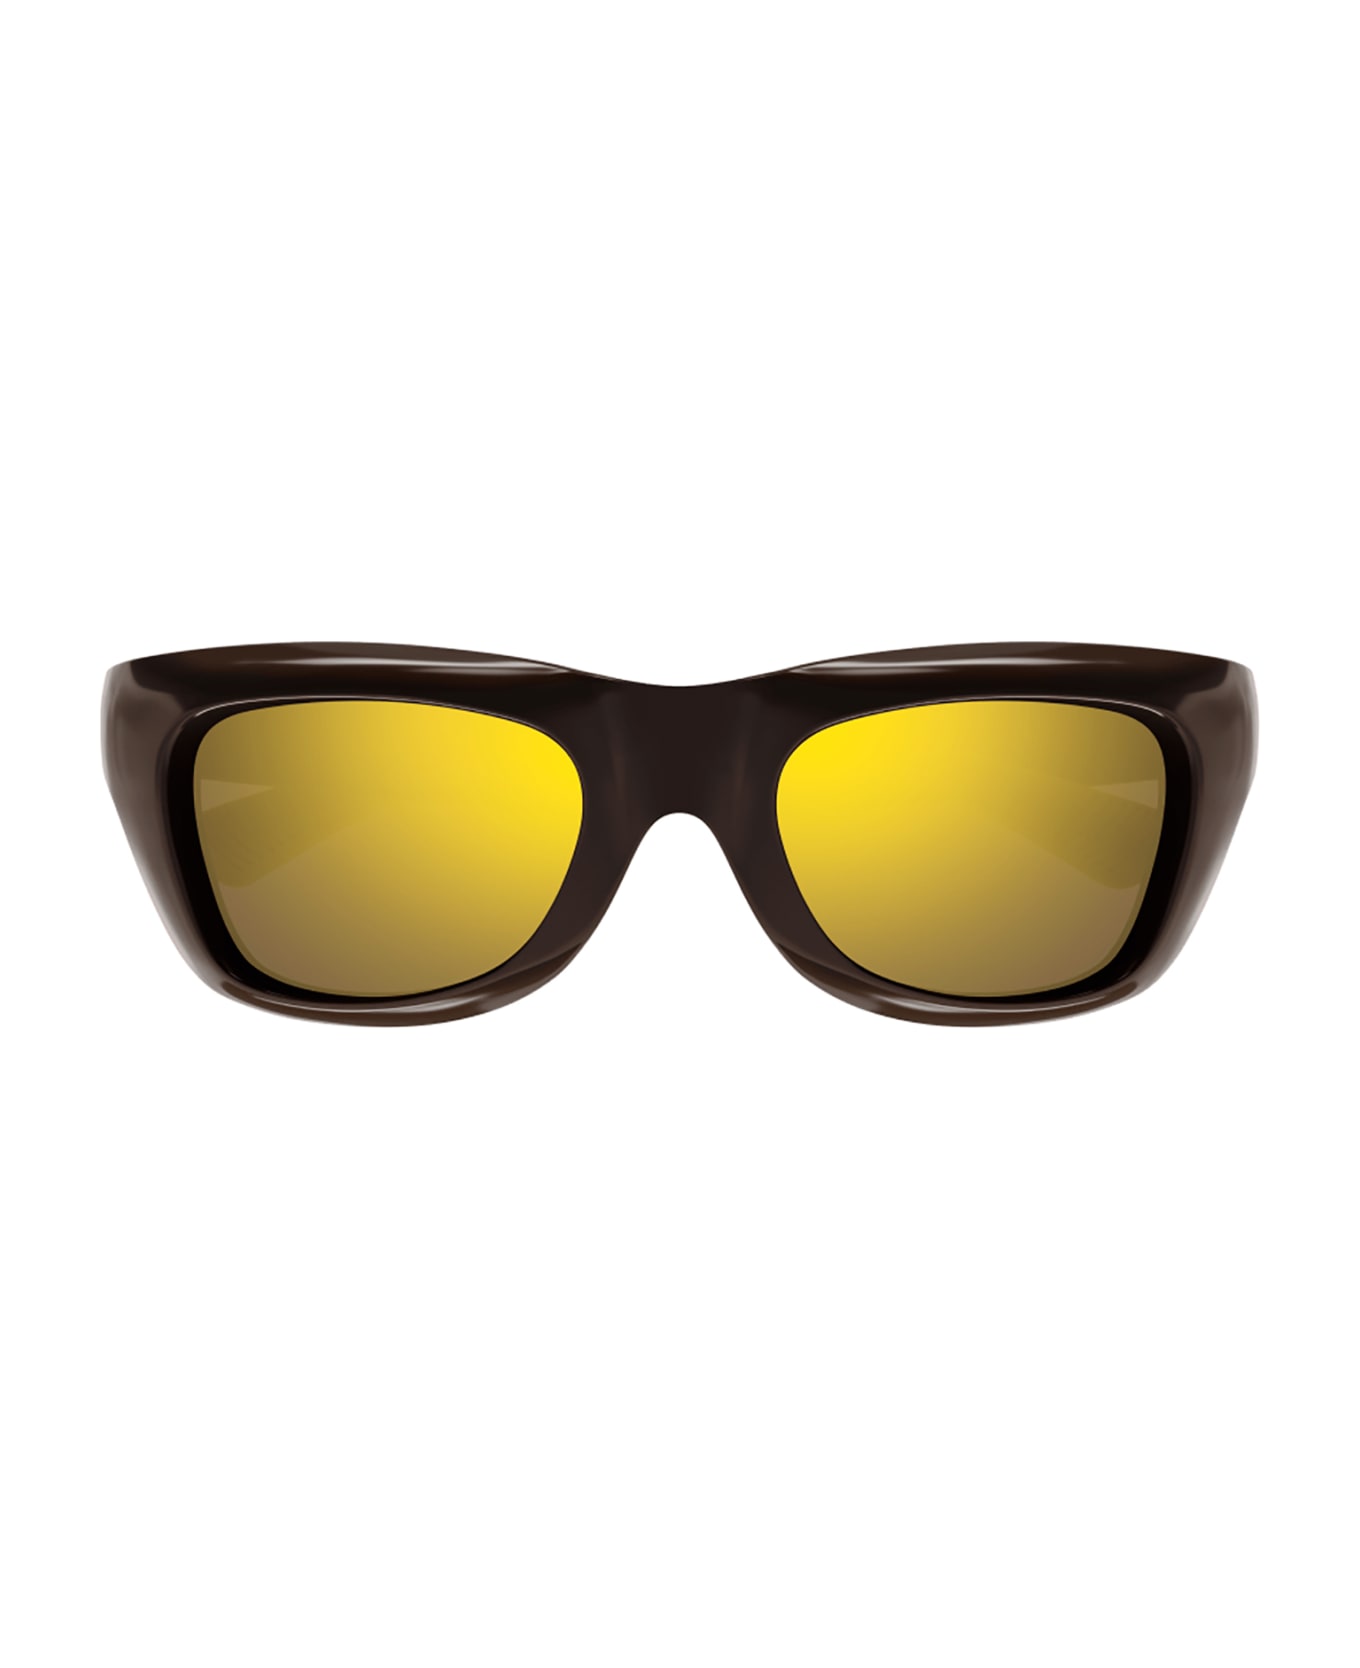 Bottega Veneta Eyewear 1e3n4id0a - Burberry Sunglasses for Women